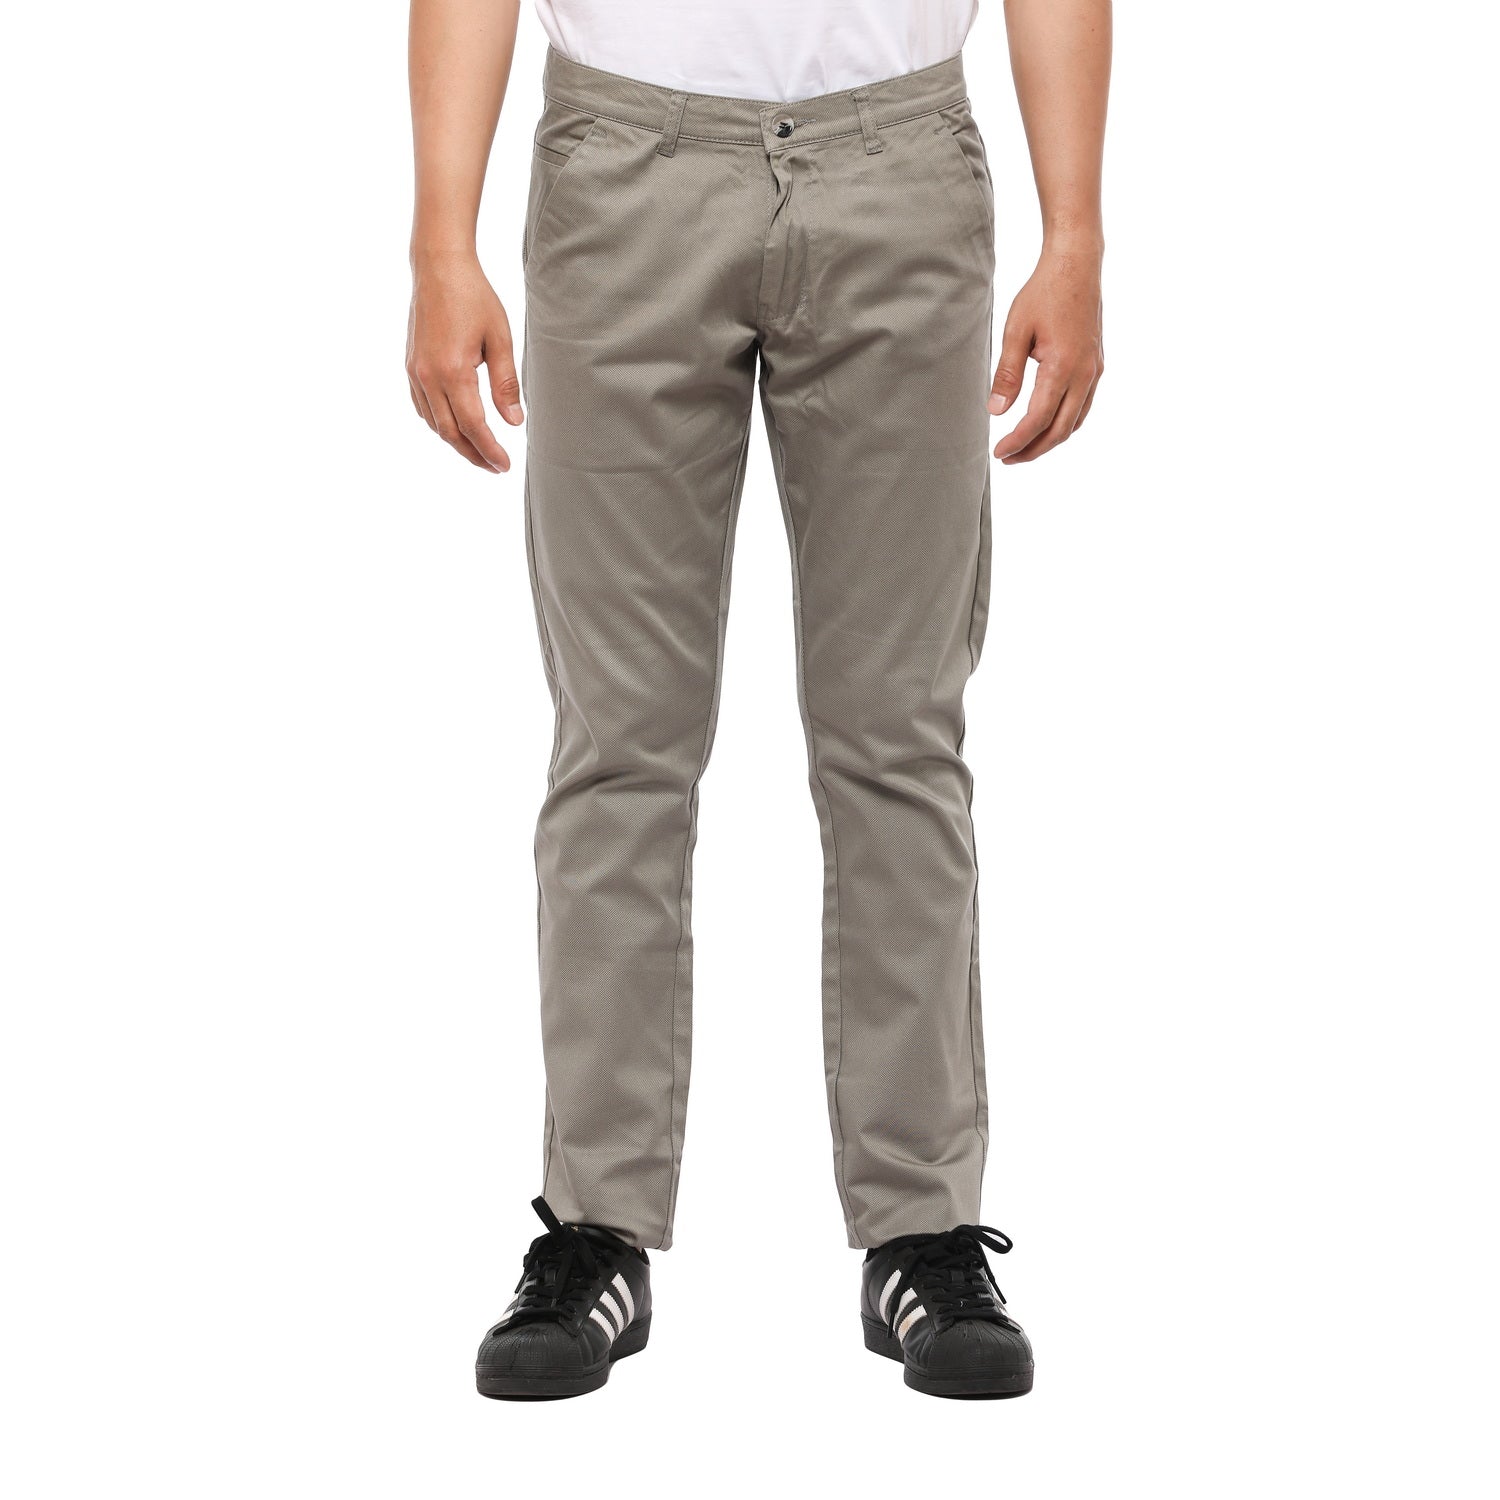 Grey Printed Mens Cotton Formal Trousers Regular Fit